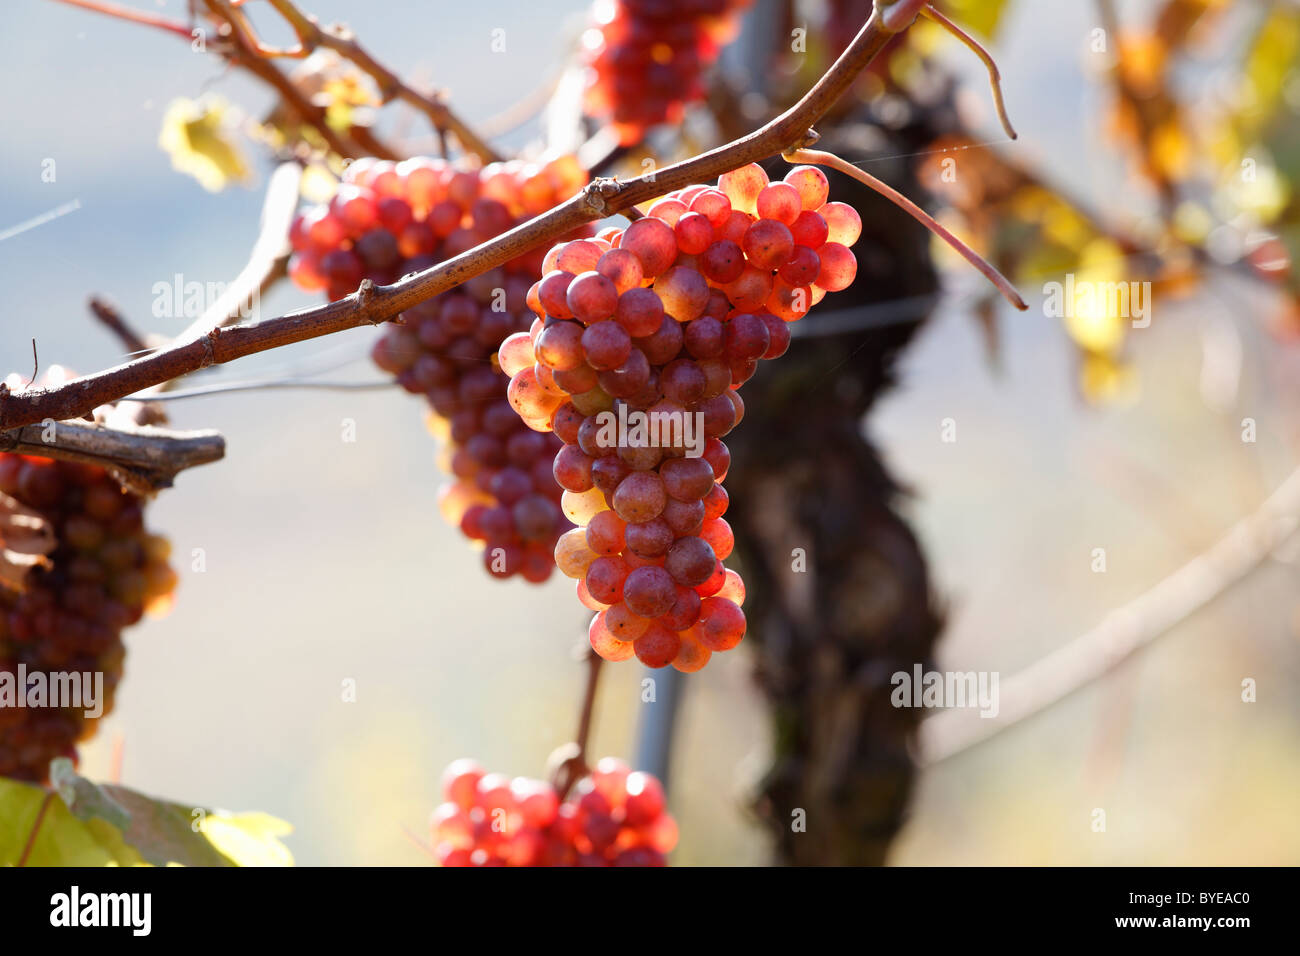 Ripe Traminer wine grapes, Wachau valley, Waldviertel region, Lower Austria, Austria, Europe Stock Photo